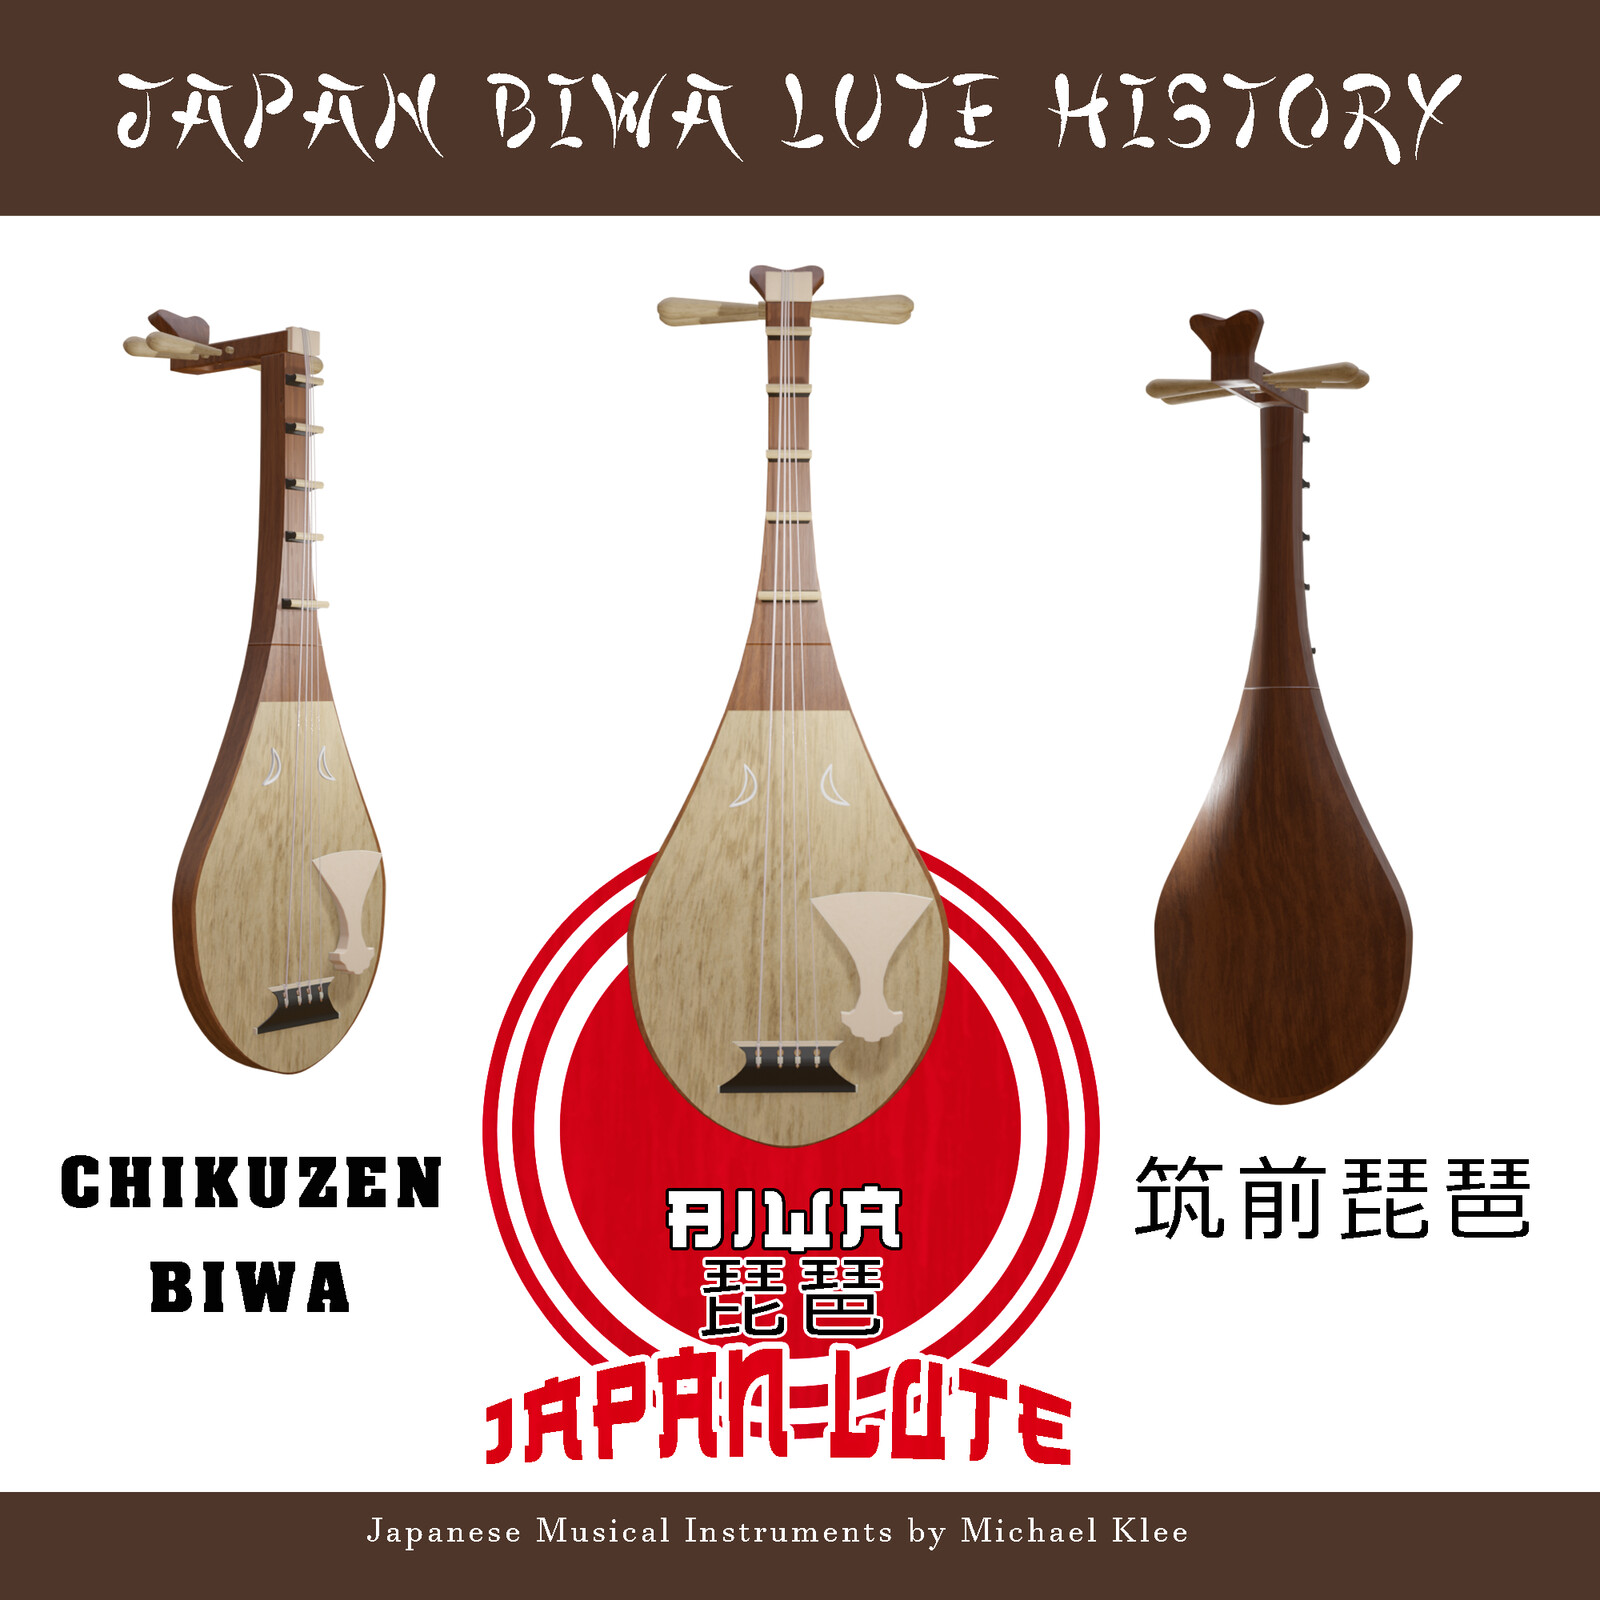 Biwa 琵琶  - Japanese Lute Instrument - Chikuzen 筑前琵琶